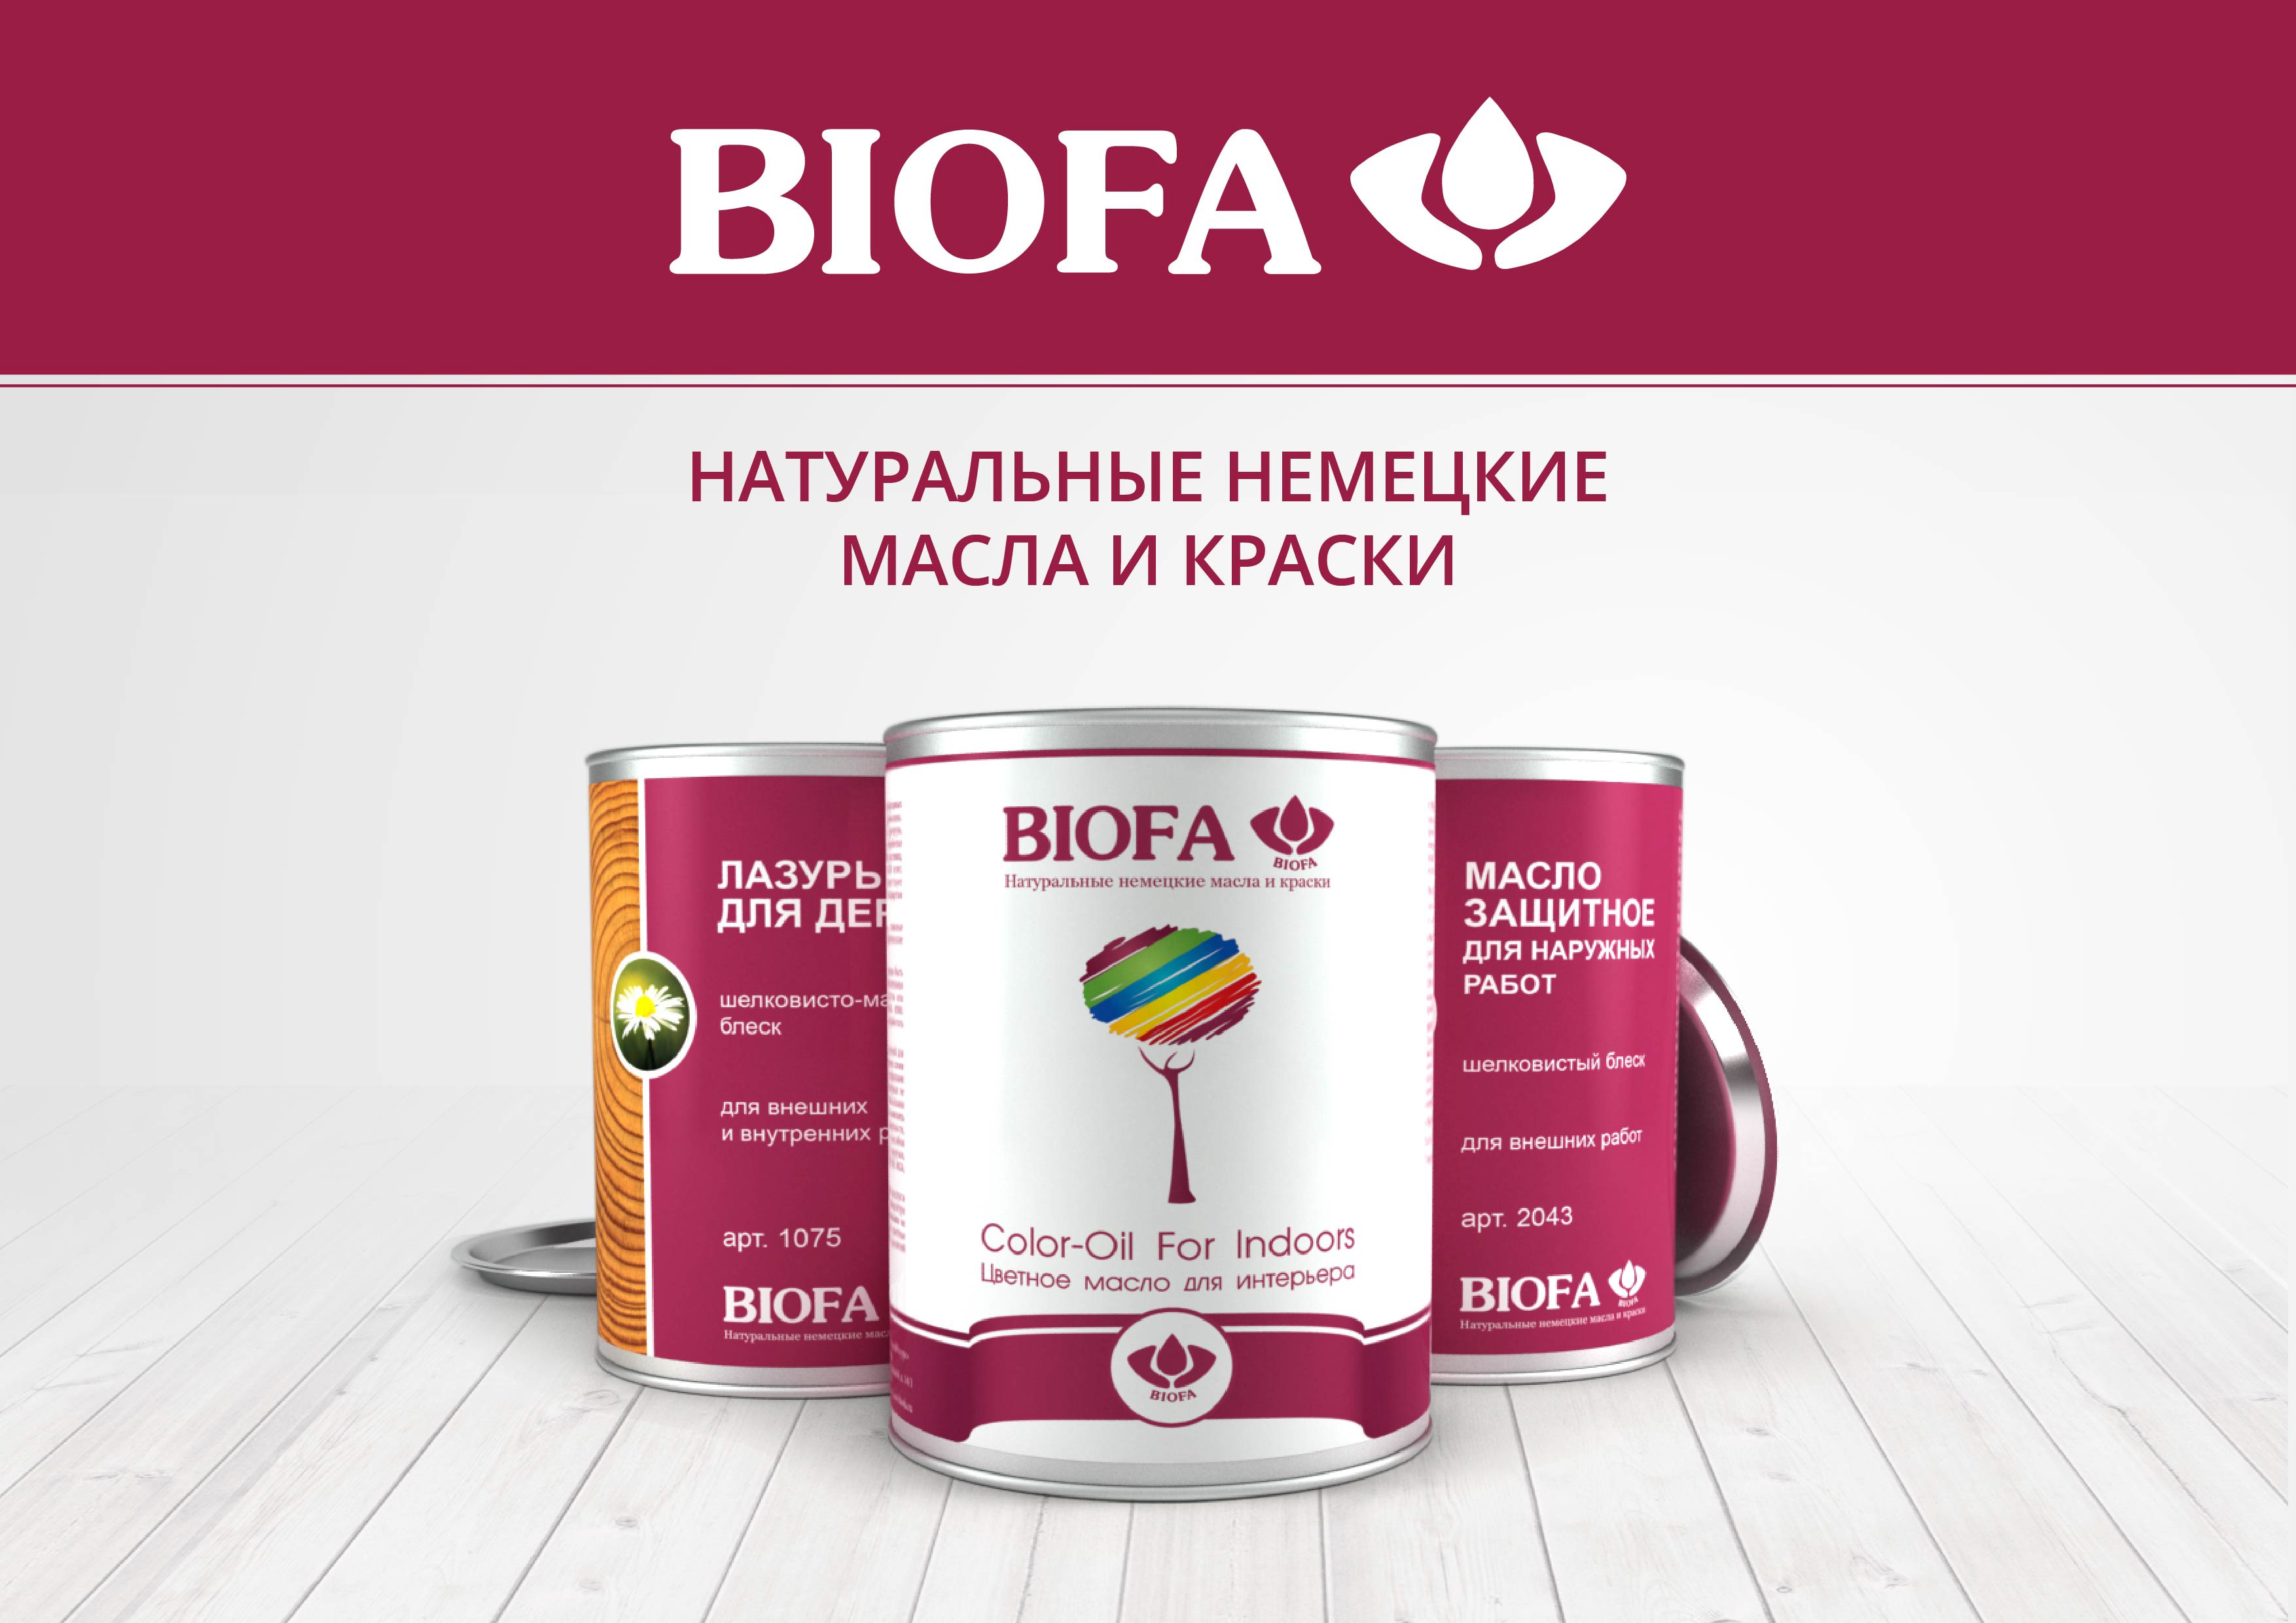 Biofa масло для дерева логотип